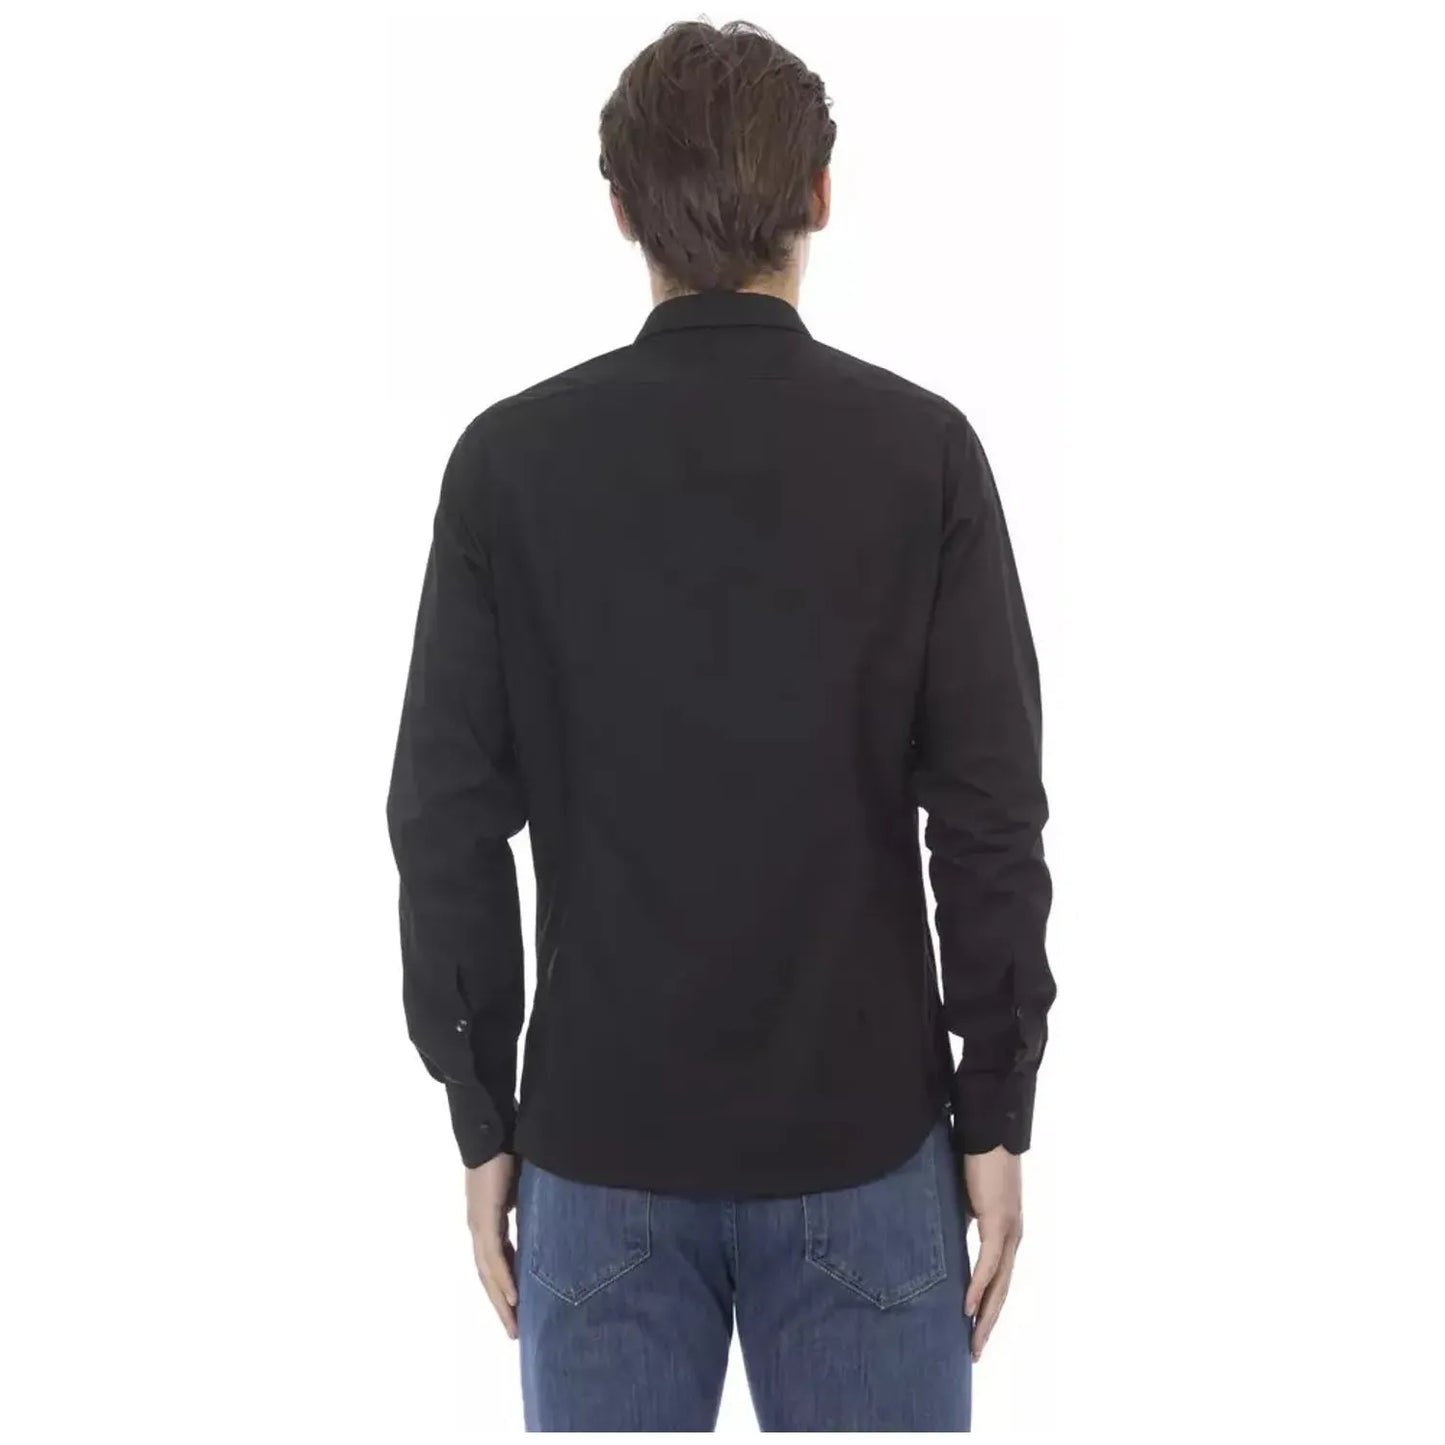 Baldinini Trend Elegant Black Slim Fit Cotton Shirt black-cotton-shirt